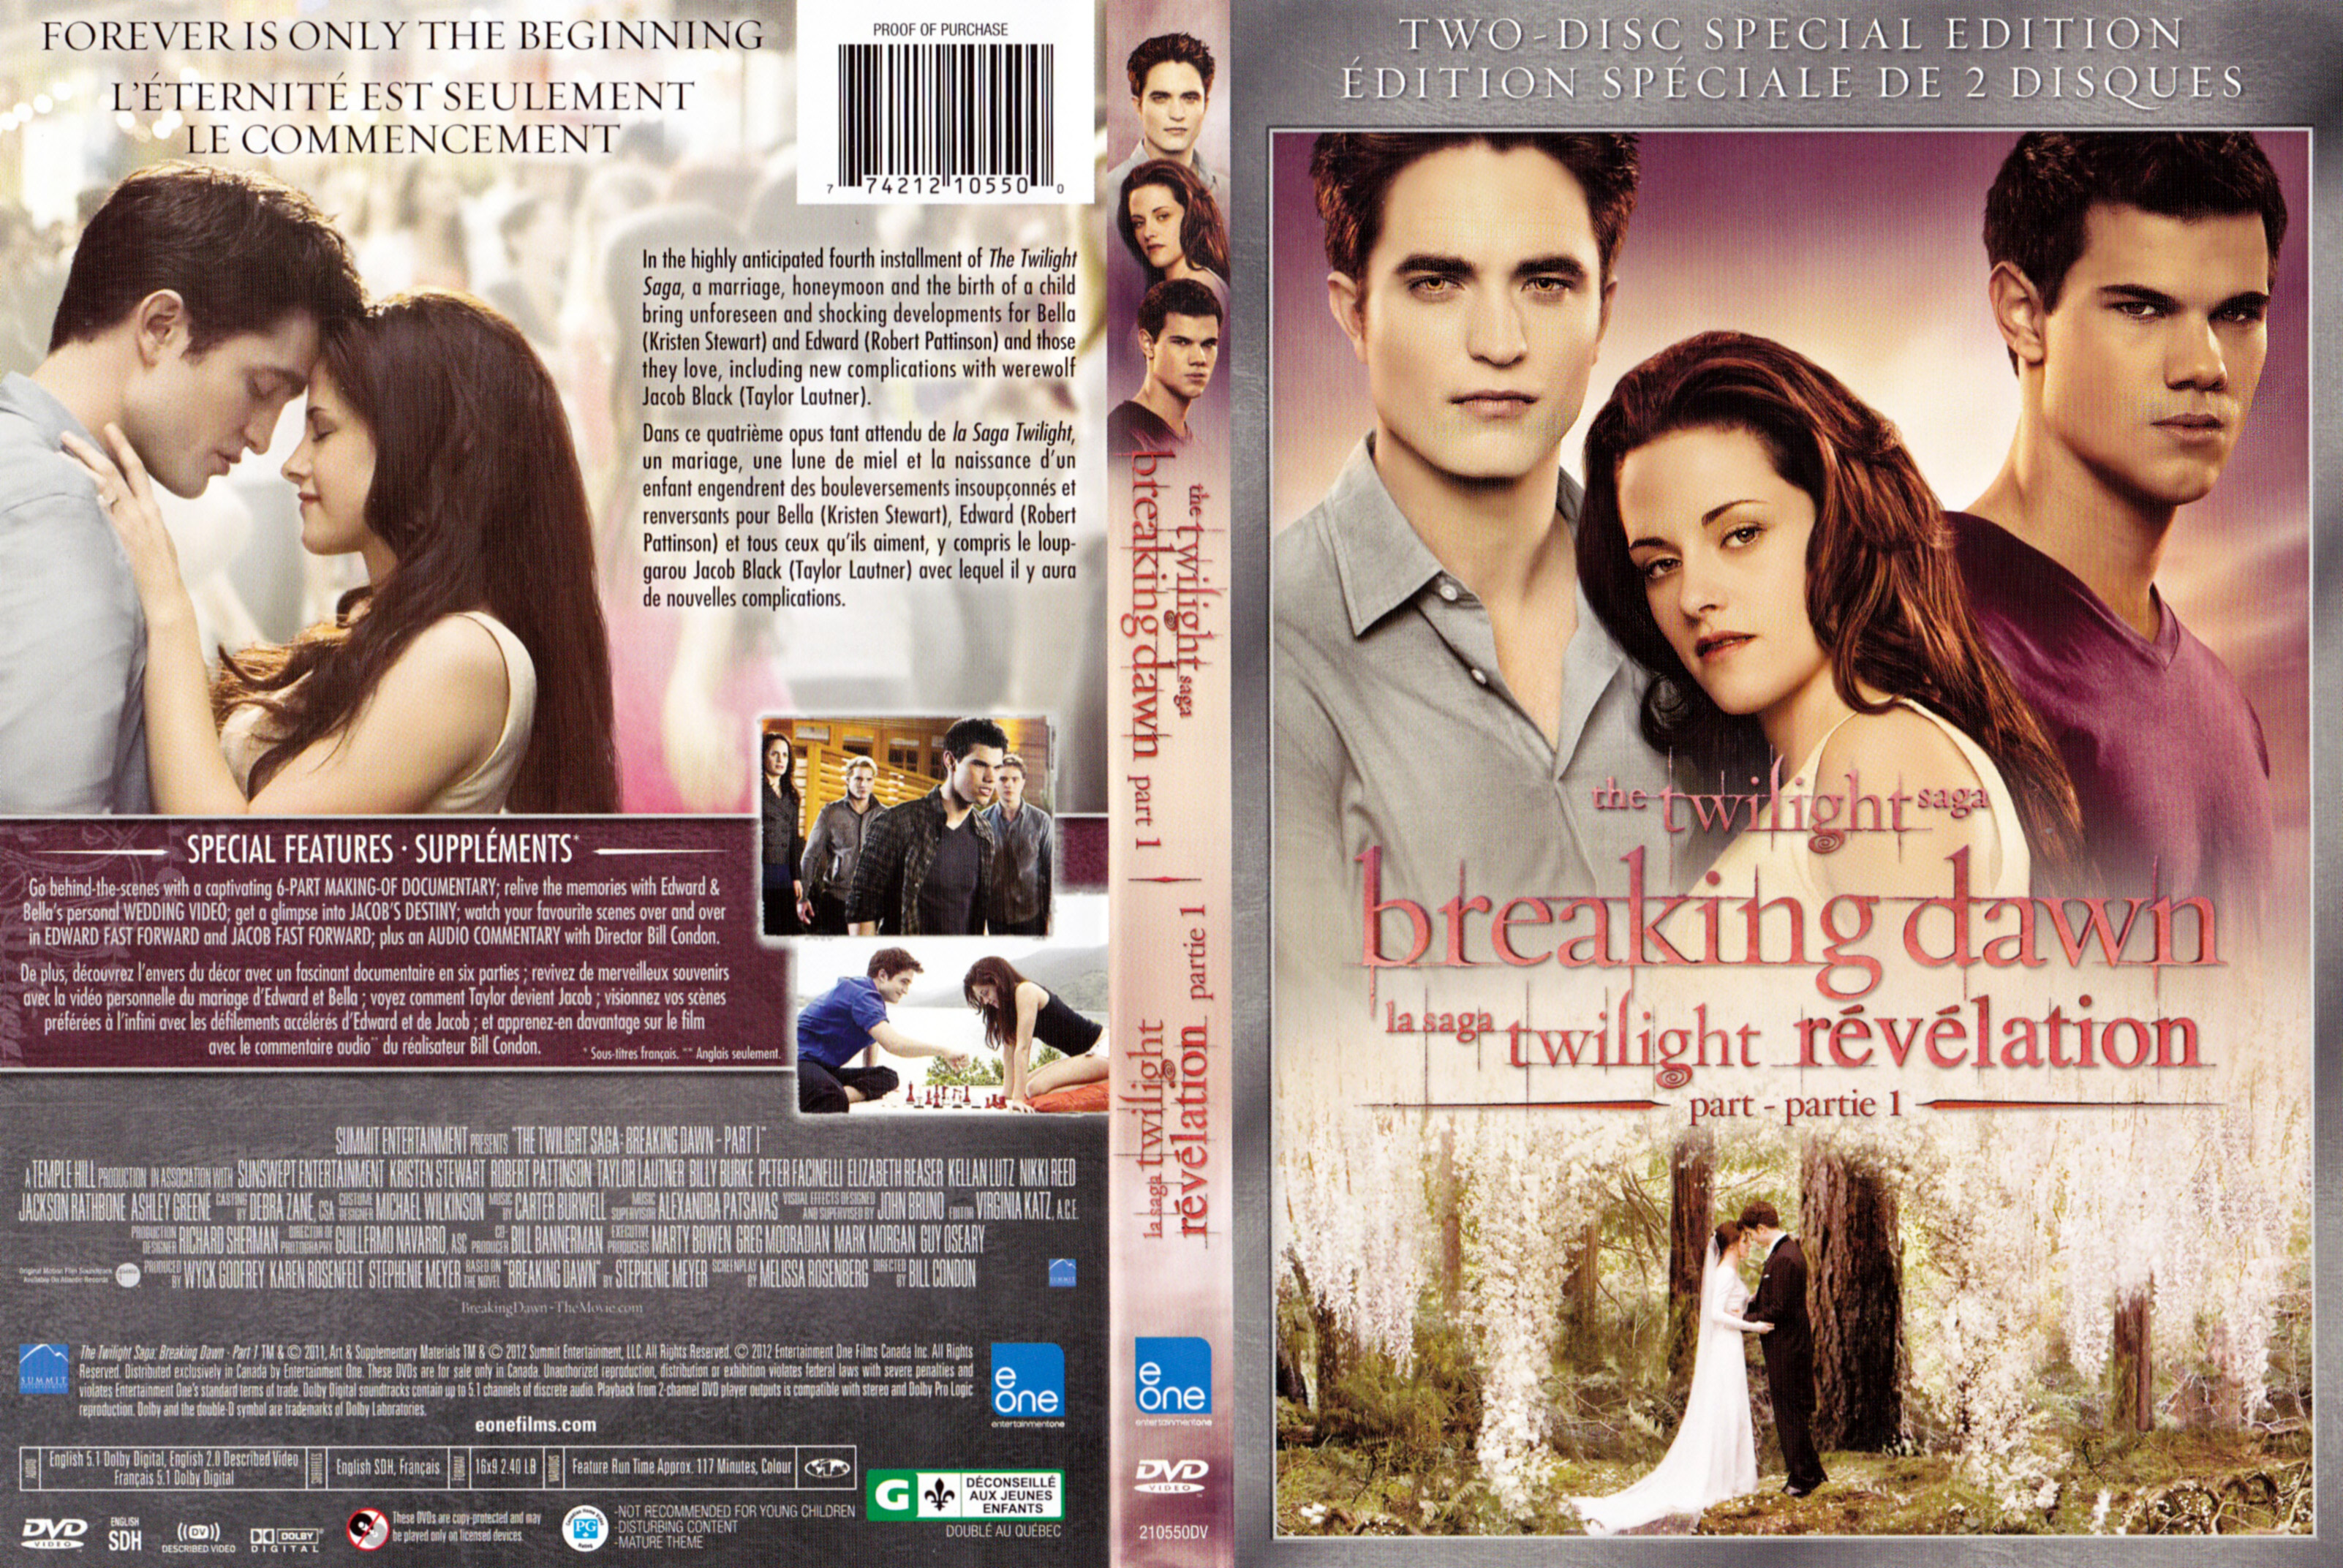 Jaquette DVD Twilight Rvlation 1ere partie (Canadienne)